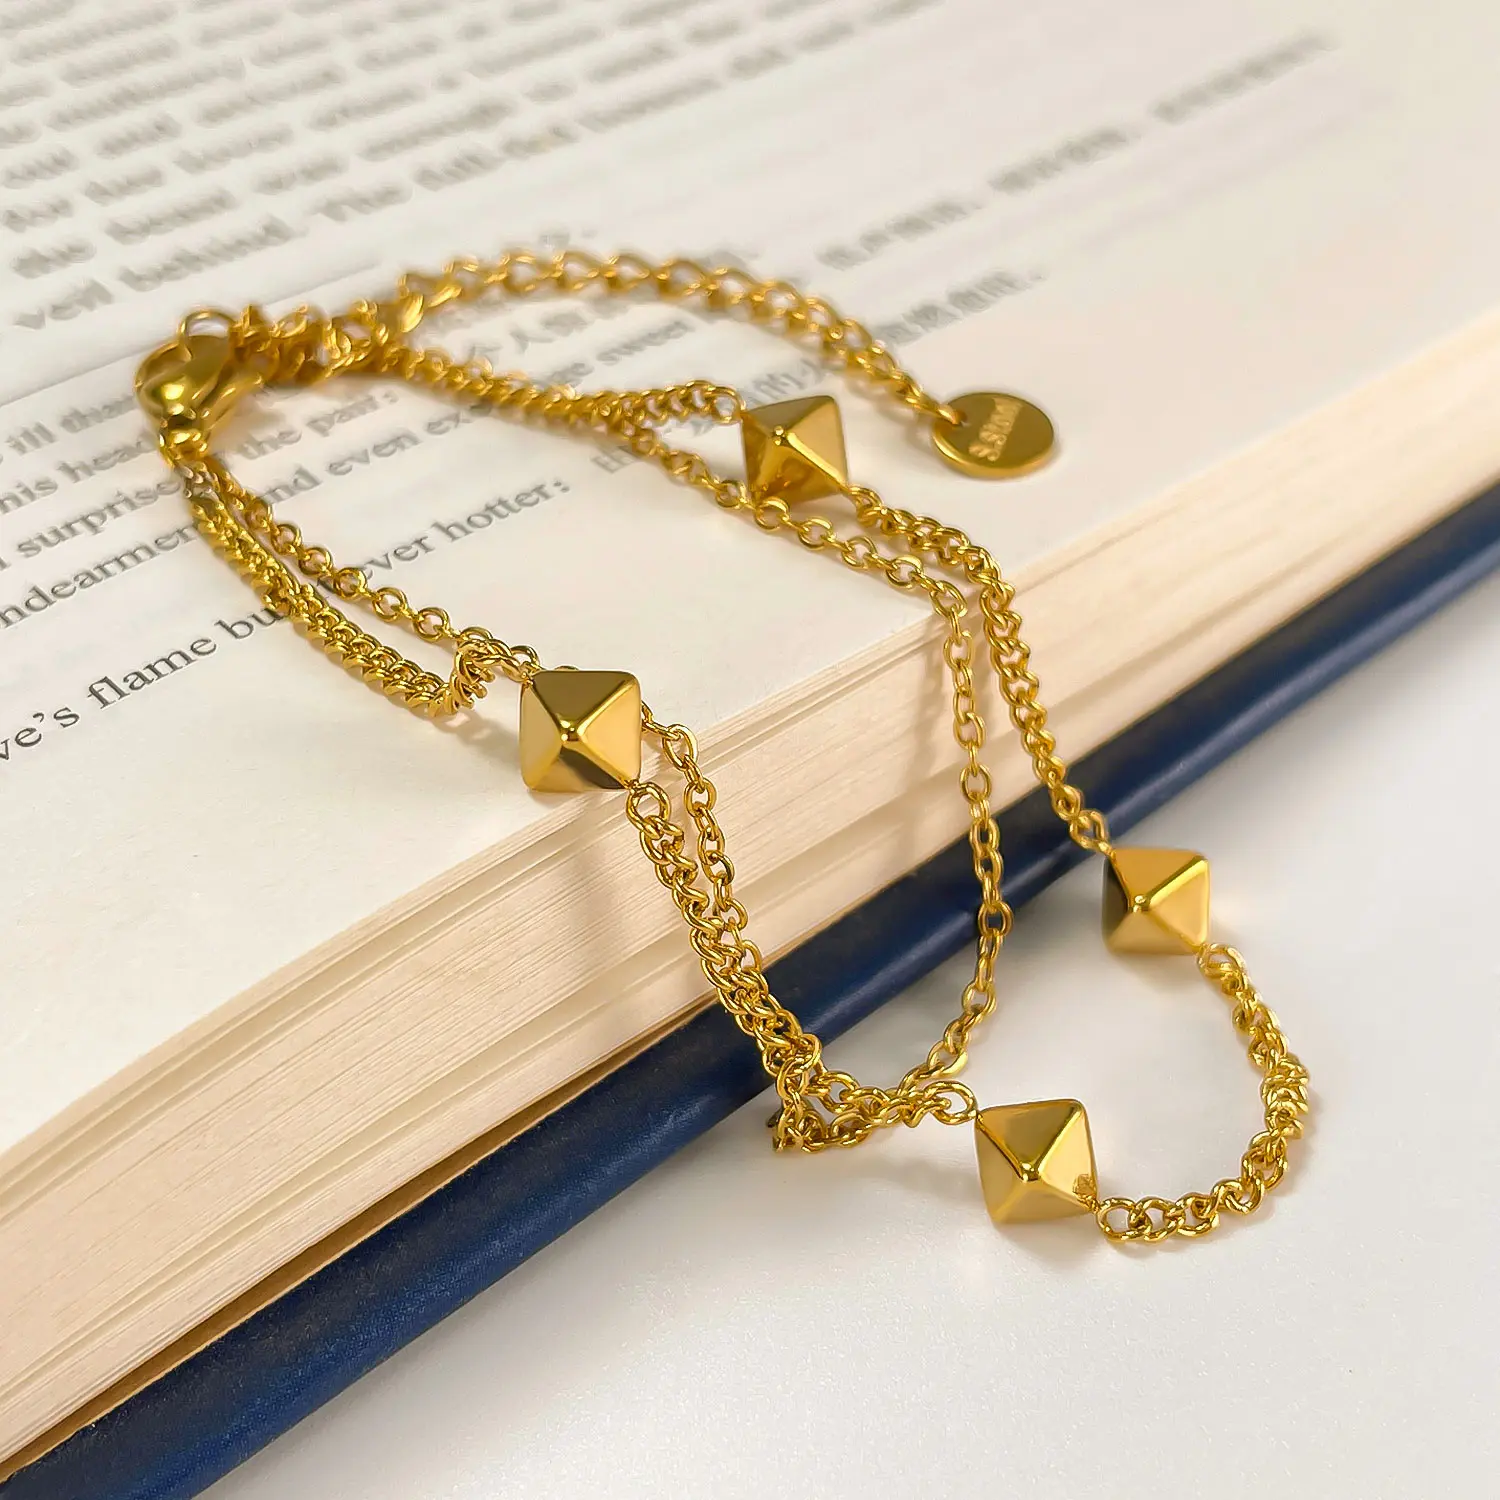 Tarnish Free Jewelry 18k Gold Plated Irregular Beaded Bracelet Waterproof Stainless Steel Double Layer Link Chain Cuff Bracelet